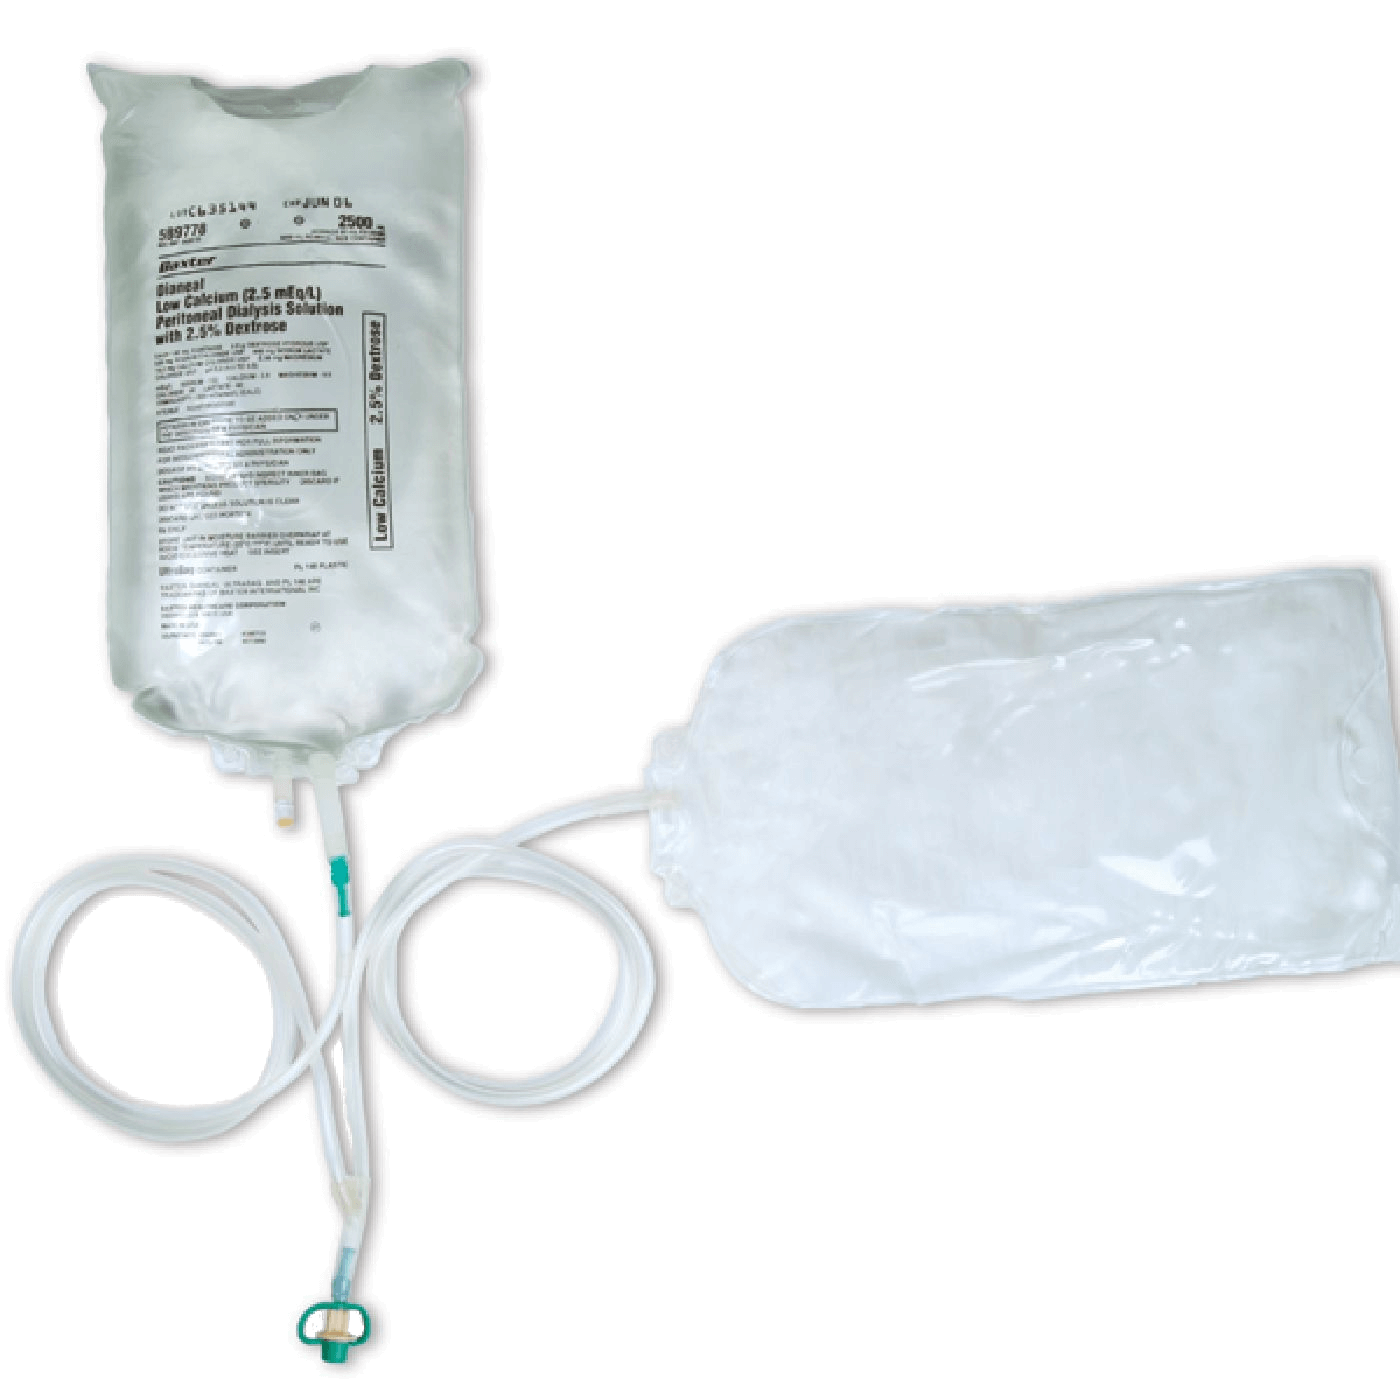 Microshield PVP Povidone-Iodine Surgical Handwash